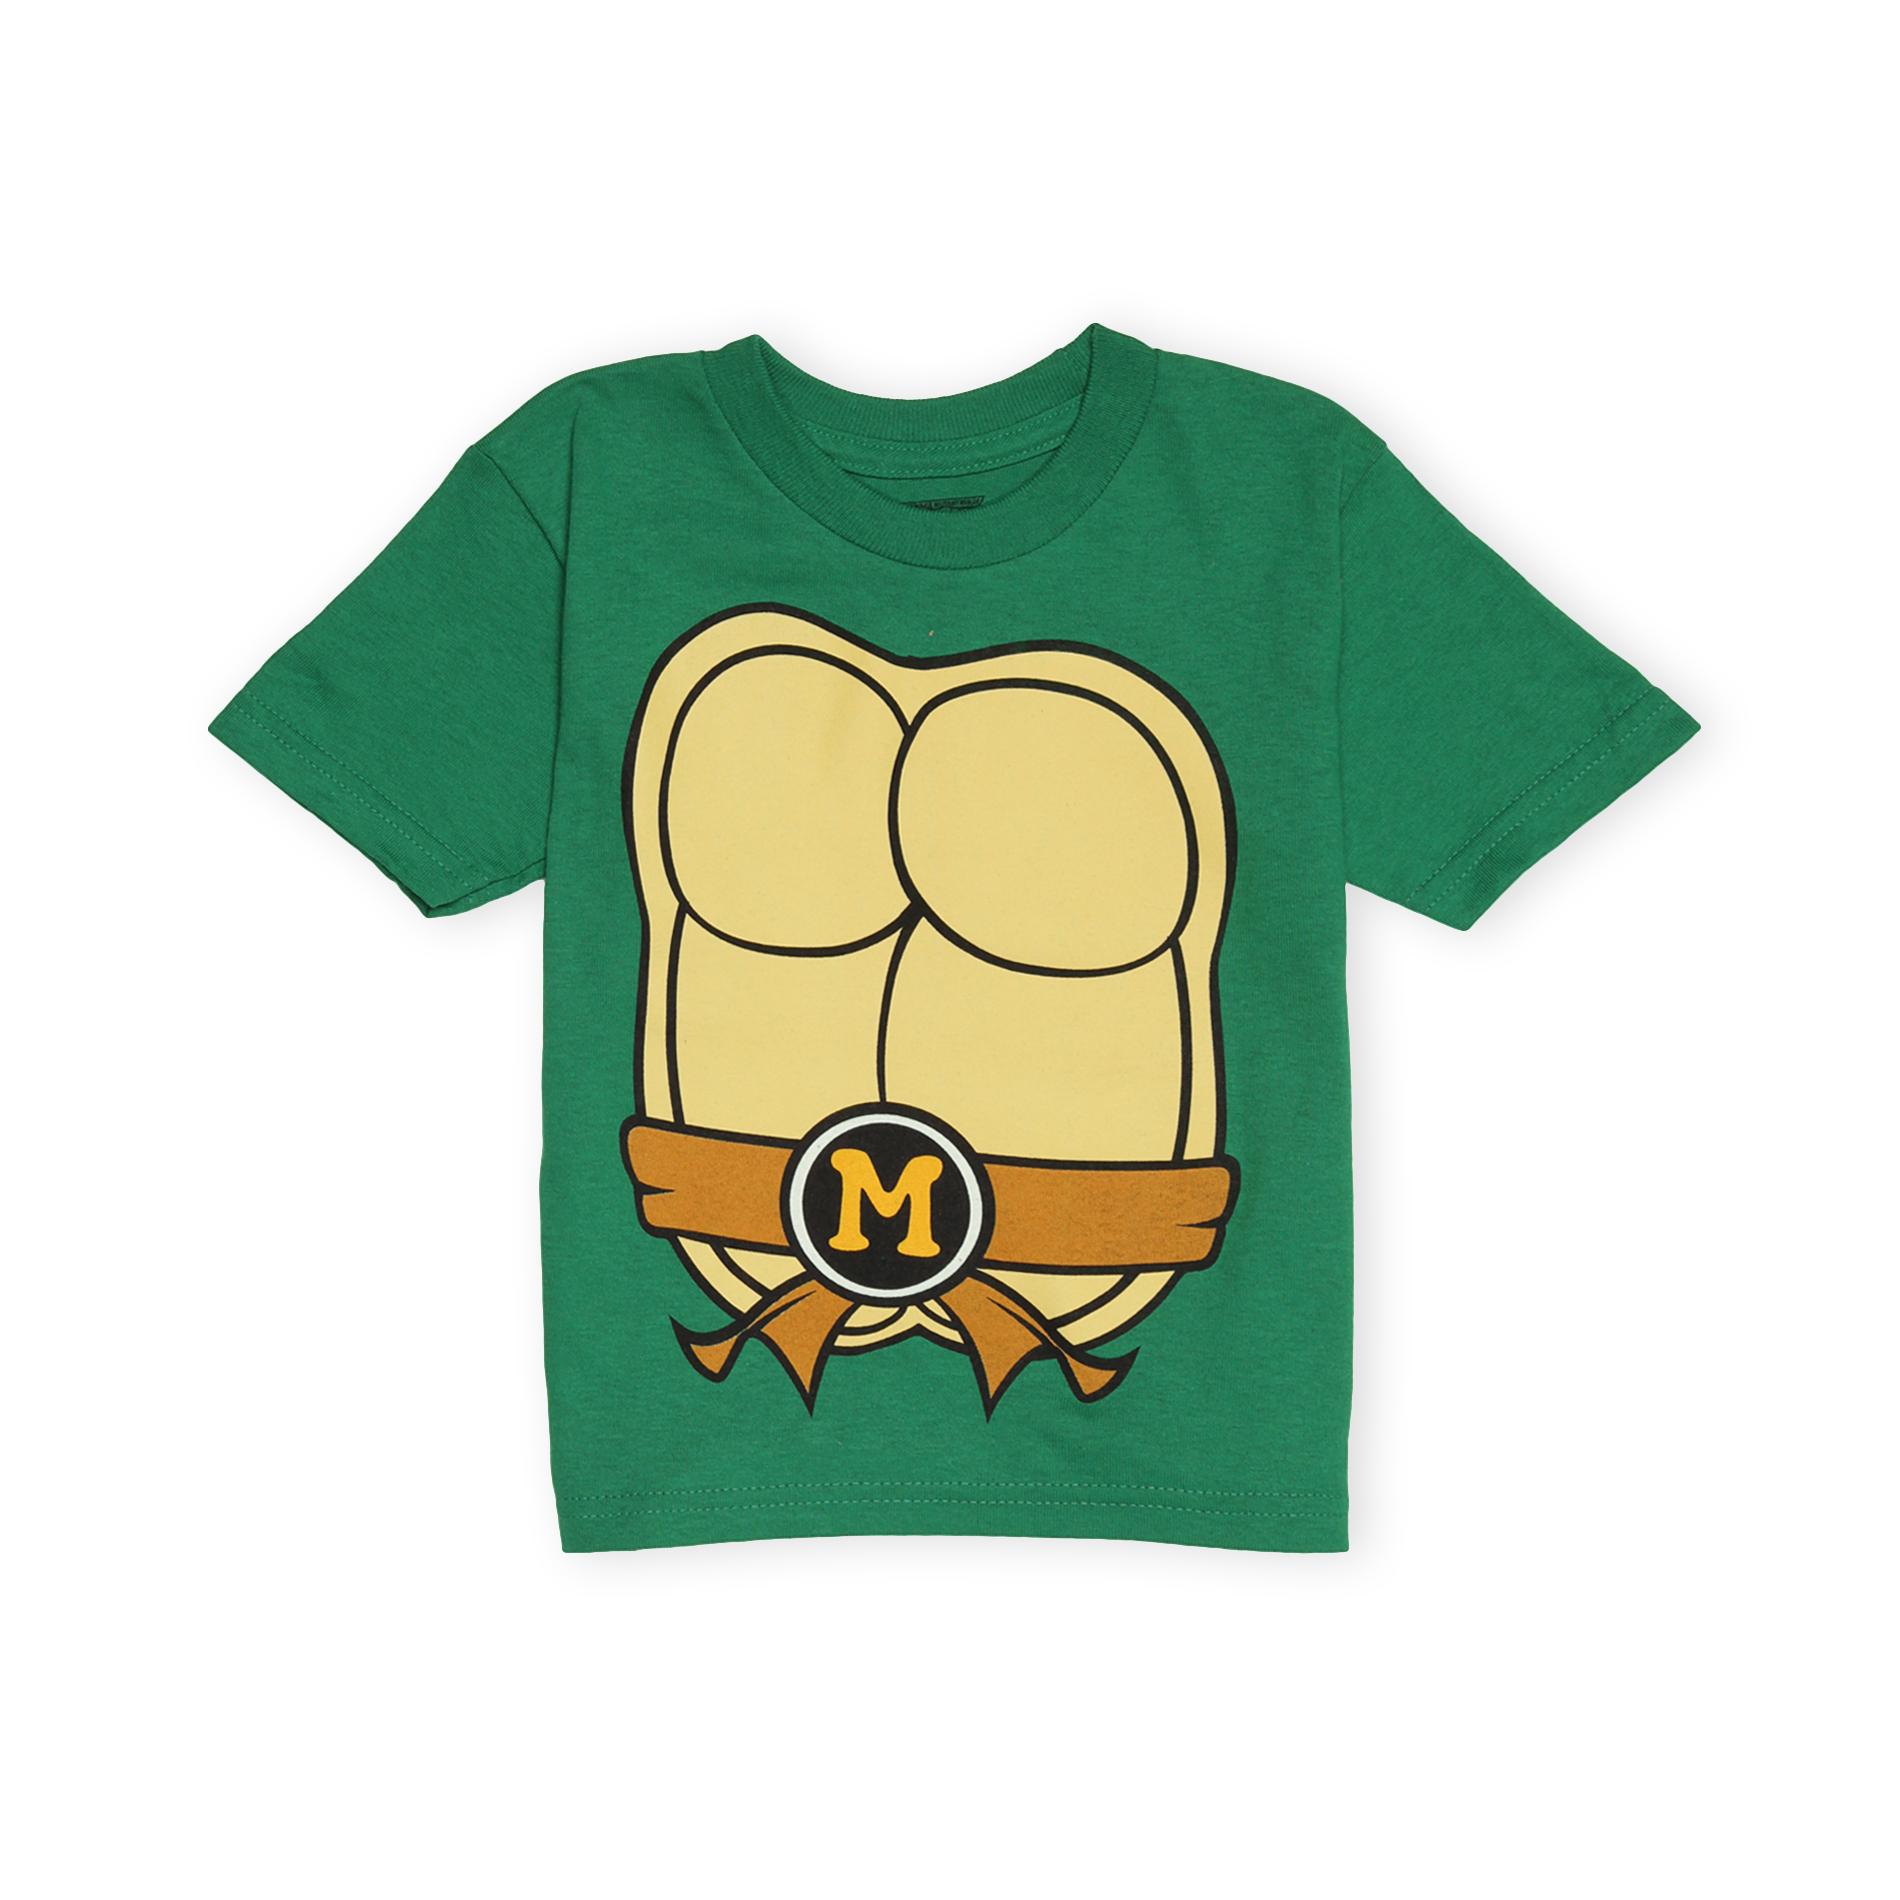 Nickelodeon Teenage Mutant Ninja Turtles Toddler Boy's Short-Sleeve T-Shirt